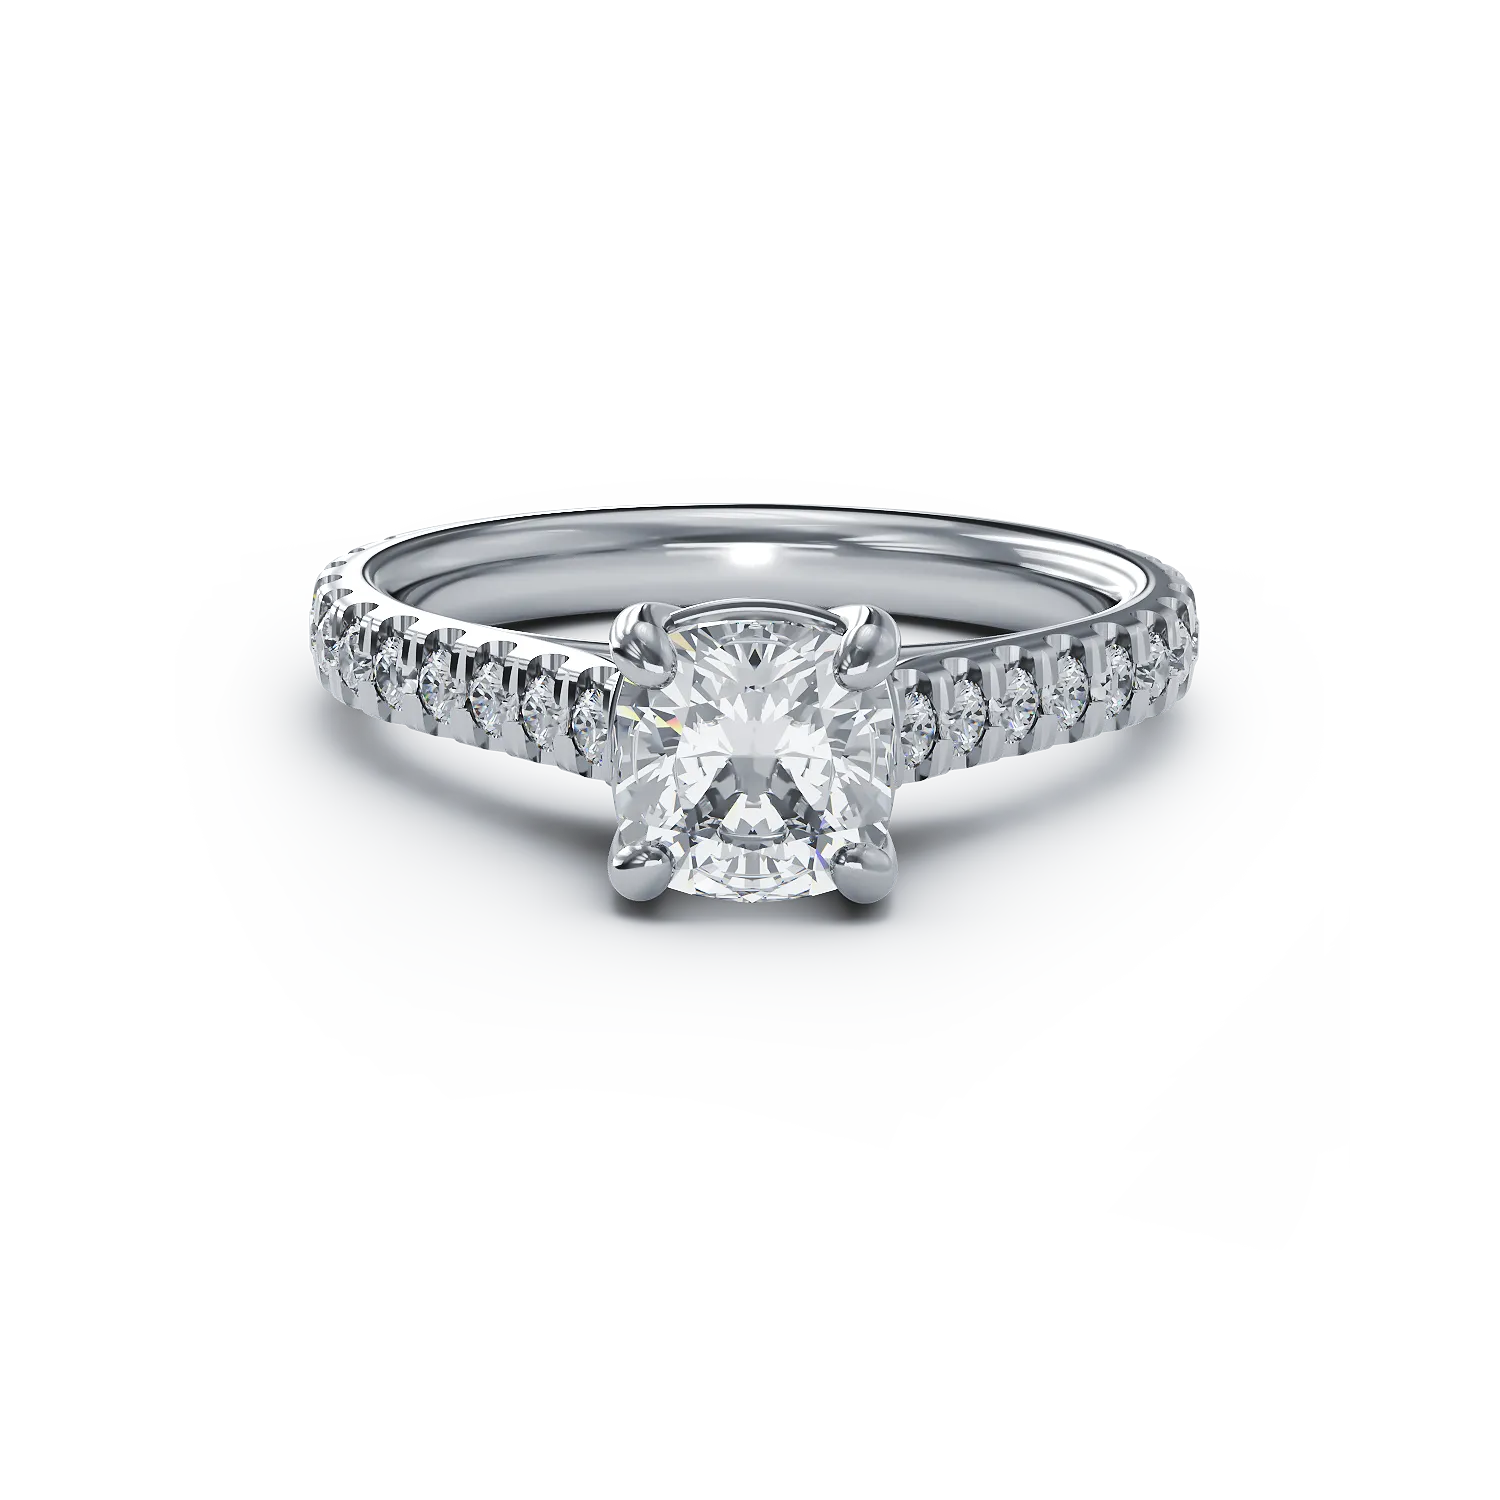 Diamond platinum engagement ring with 1.2ct diamond and 0.373ct diamonds